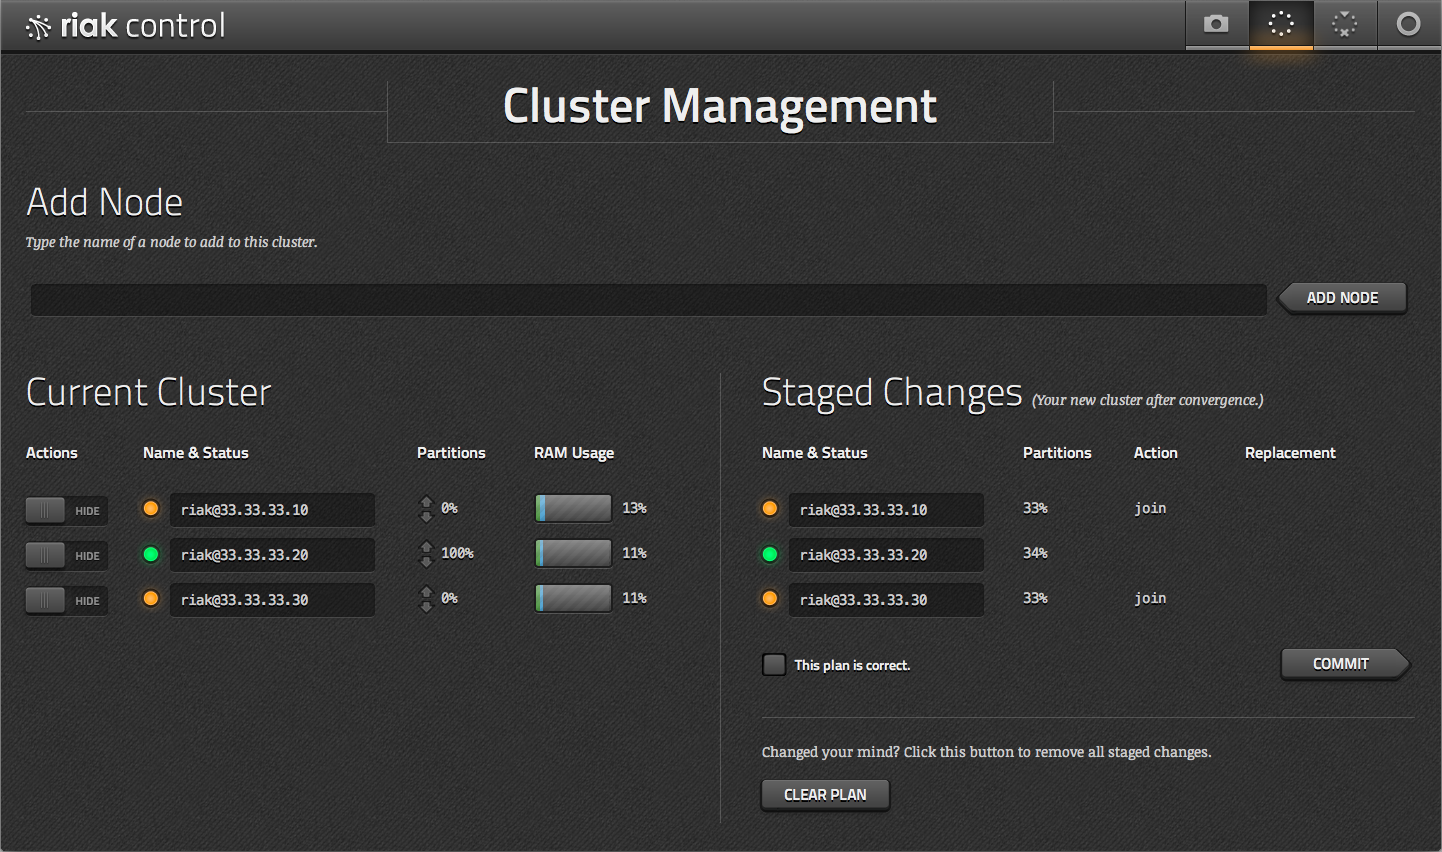 Cluster Management Staged